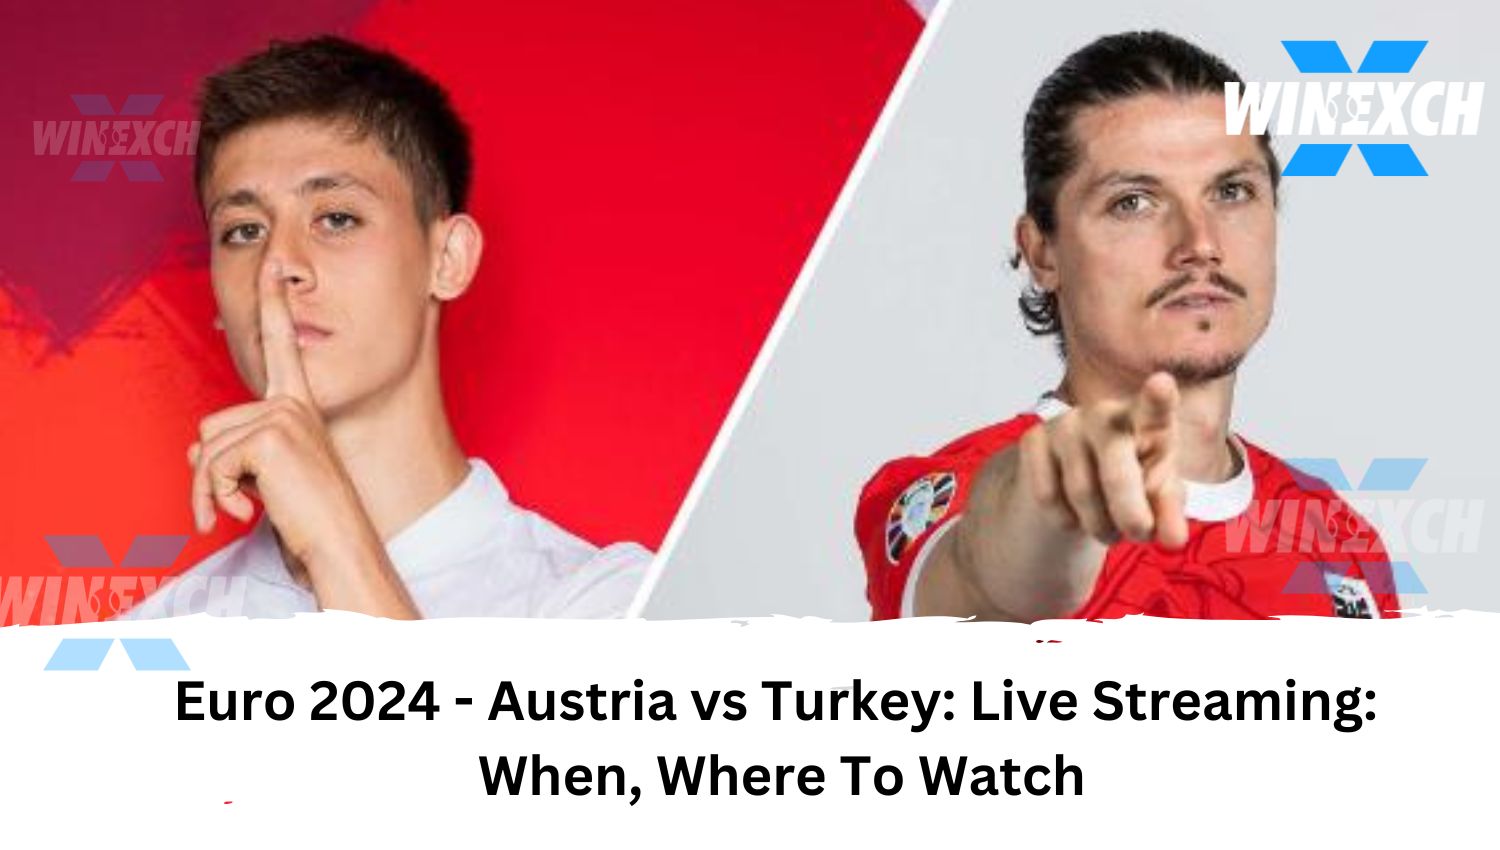 Austria vs Turkye